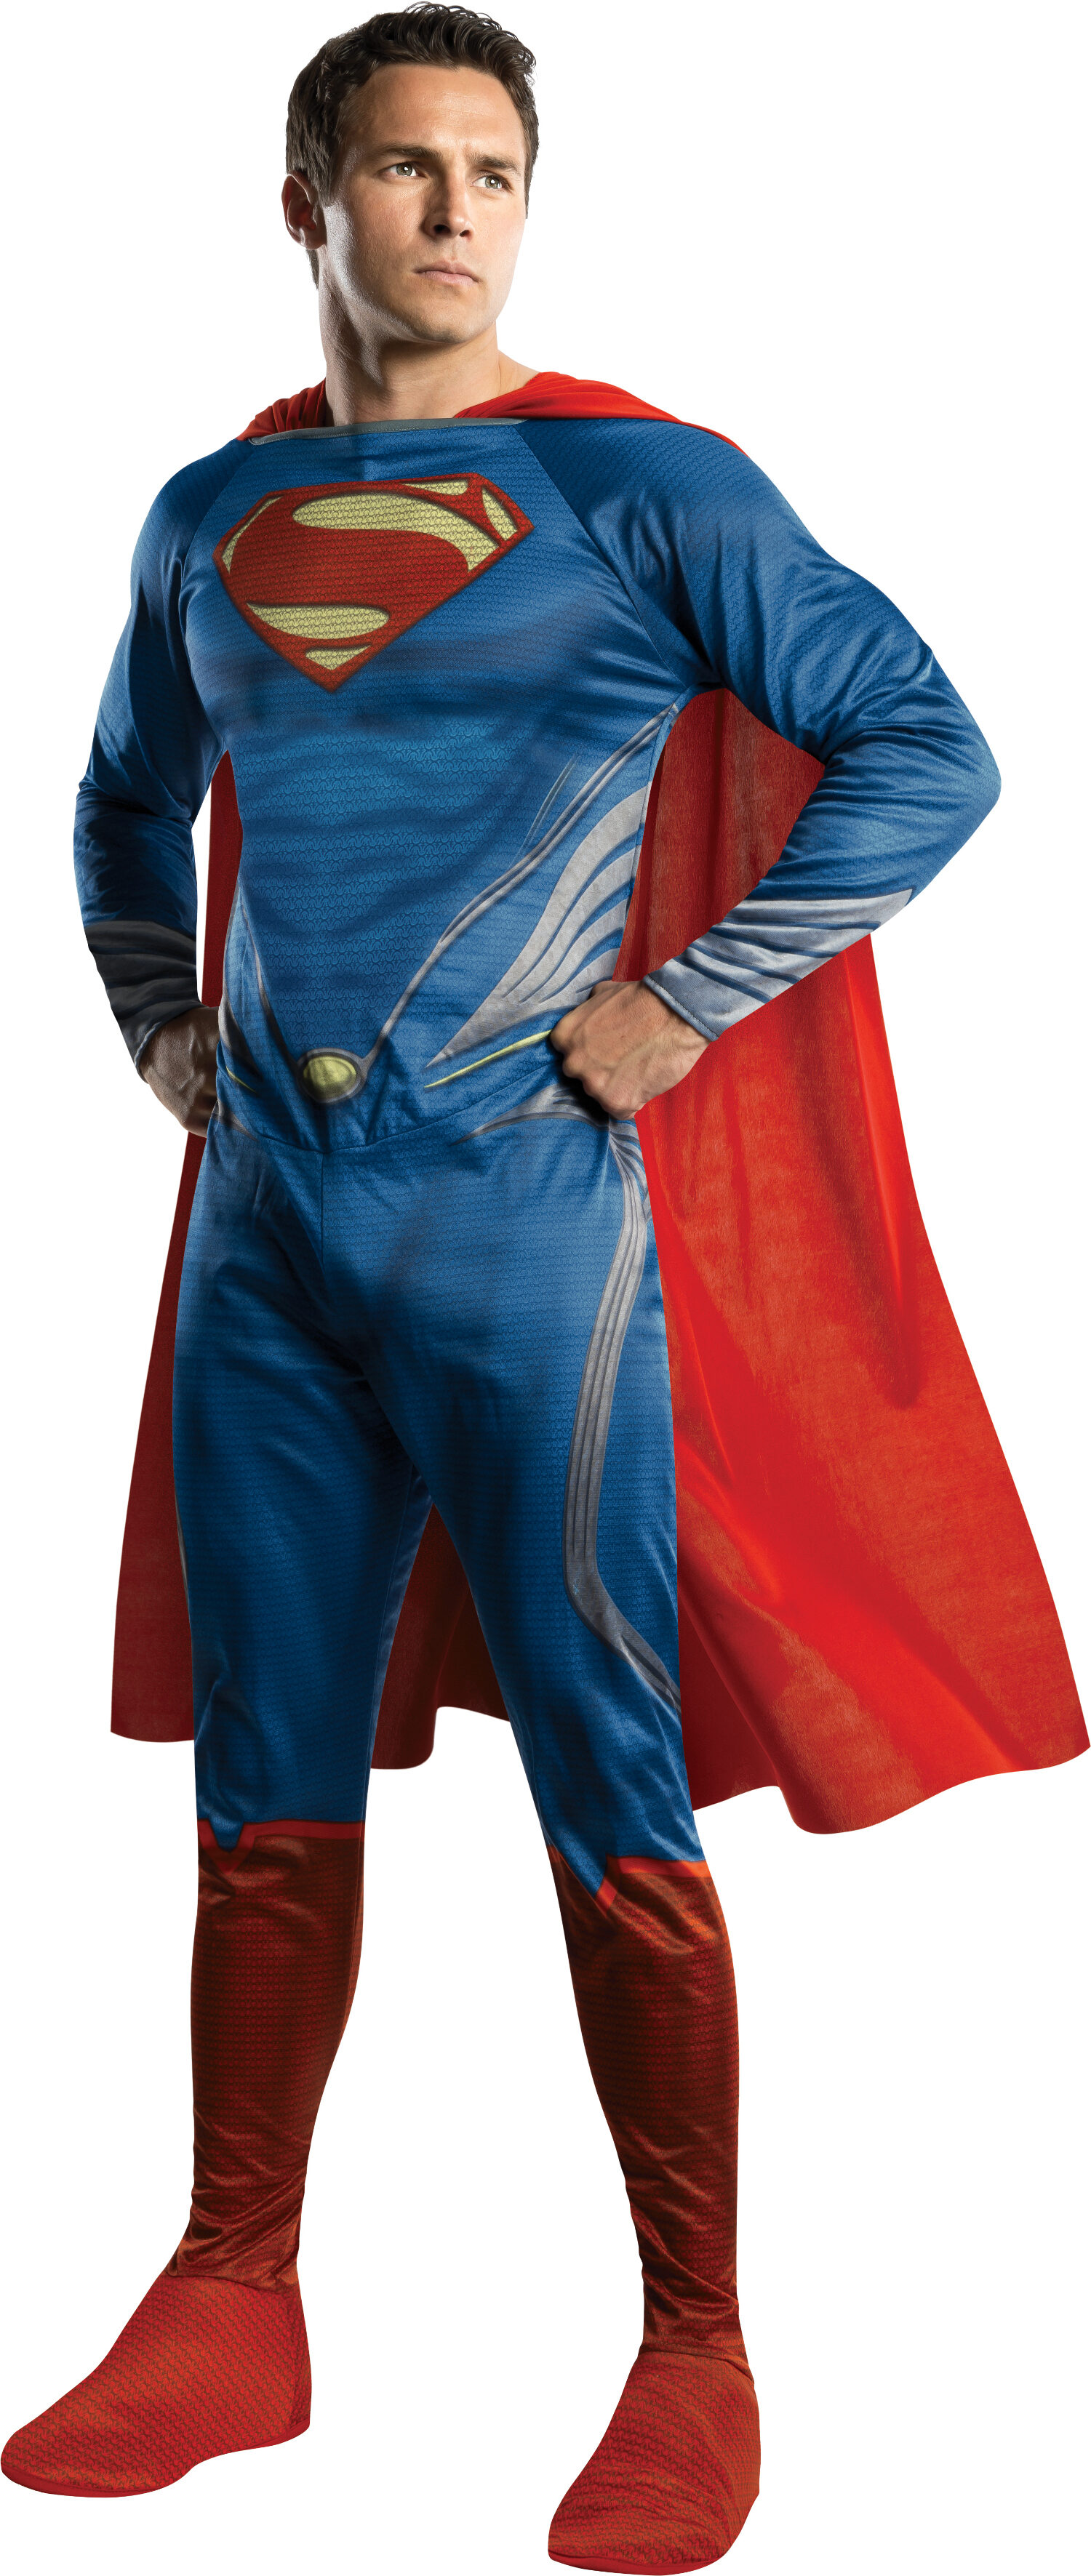 Boys Girls Superhero Fancy Dress Comic Book Supergirl Superman Batman Book  Day | eBay